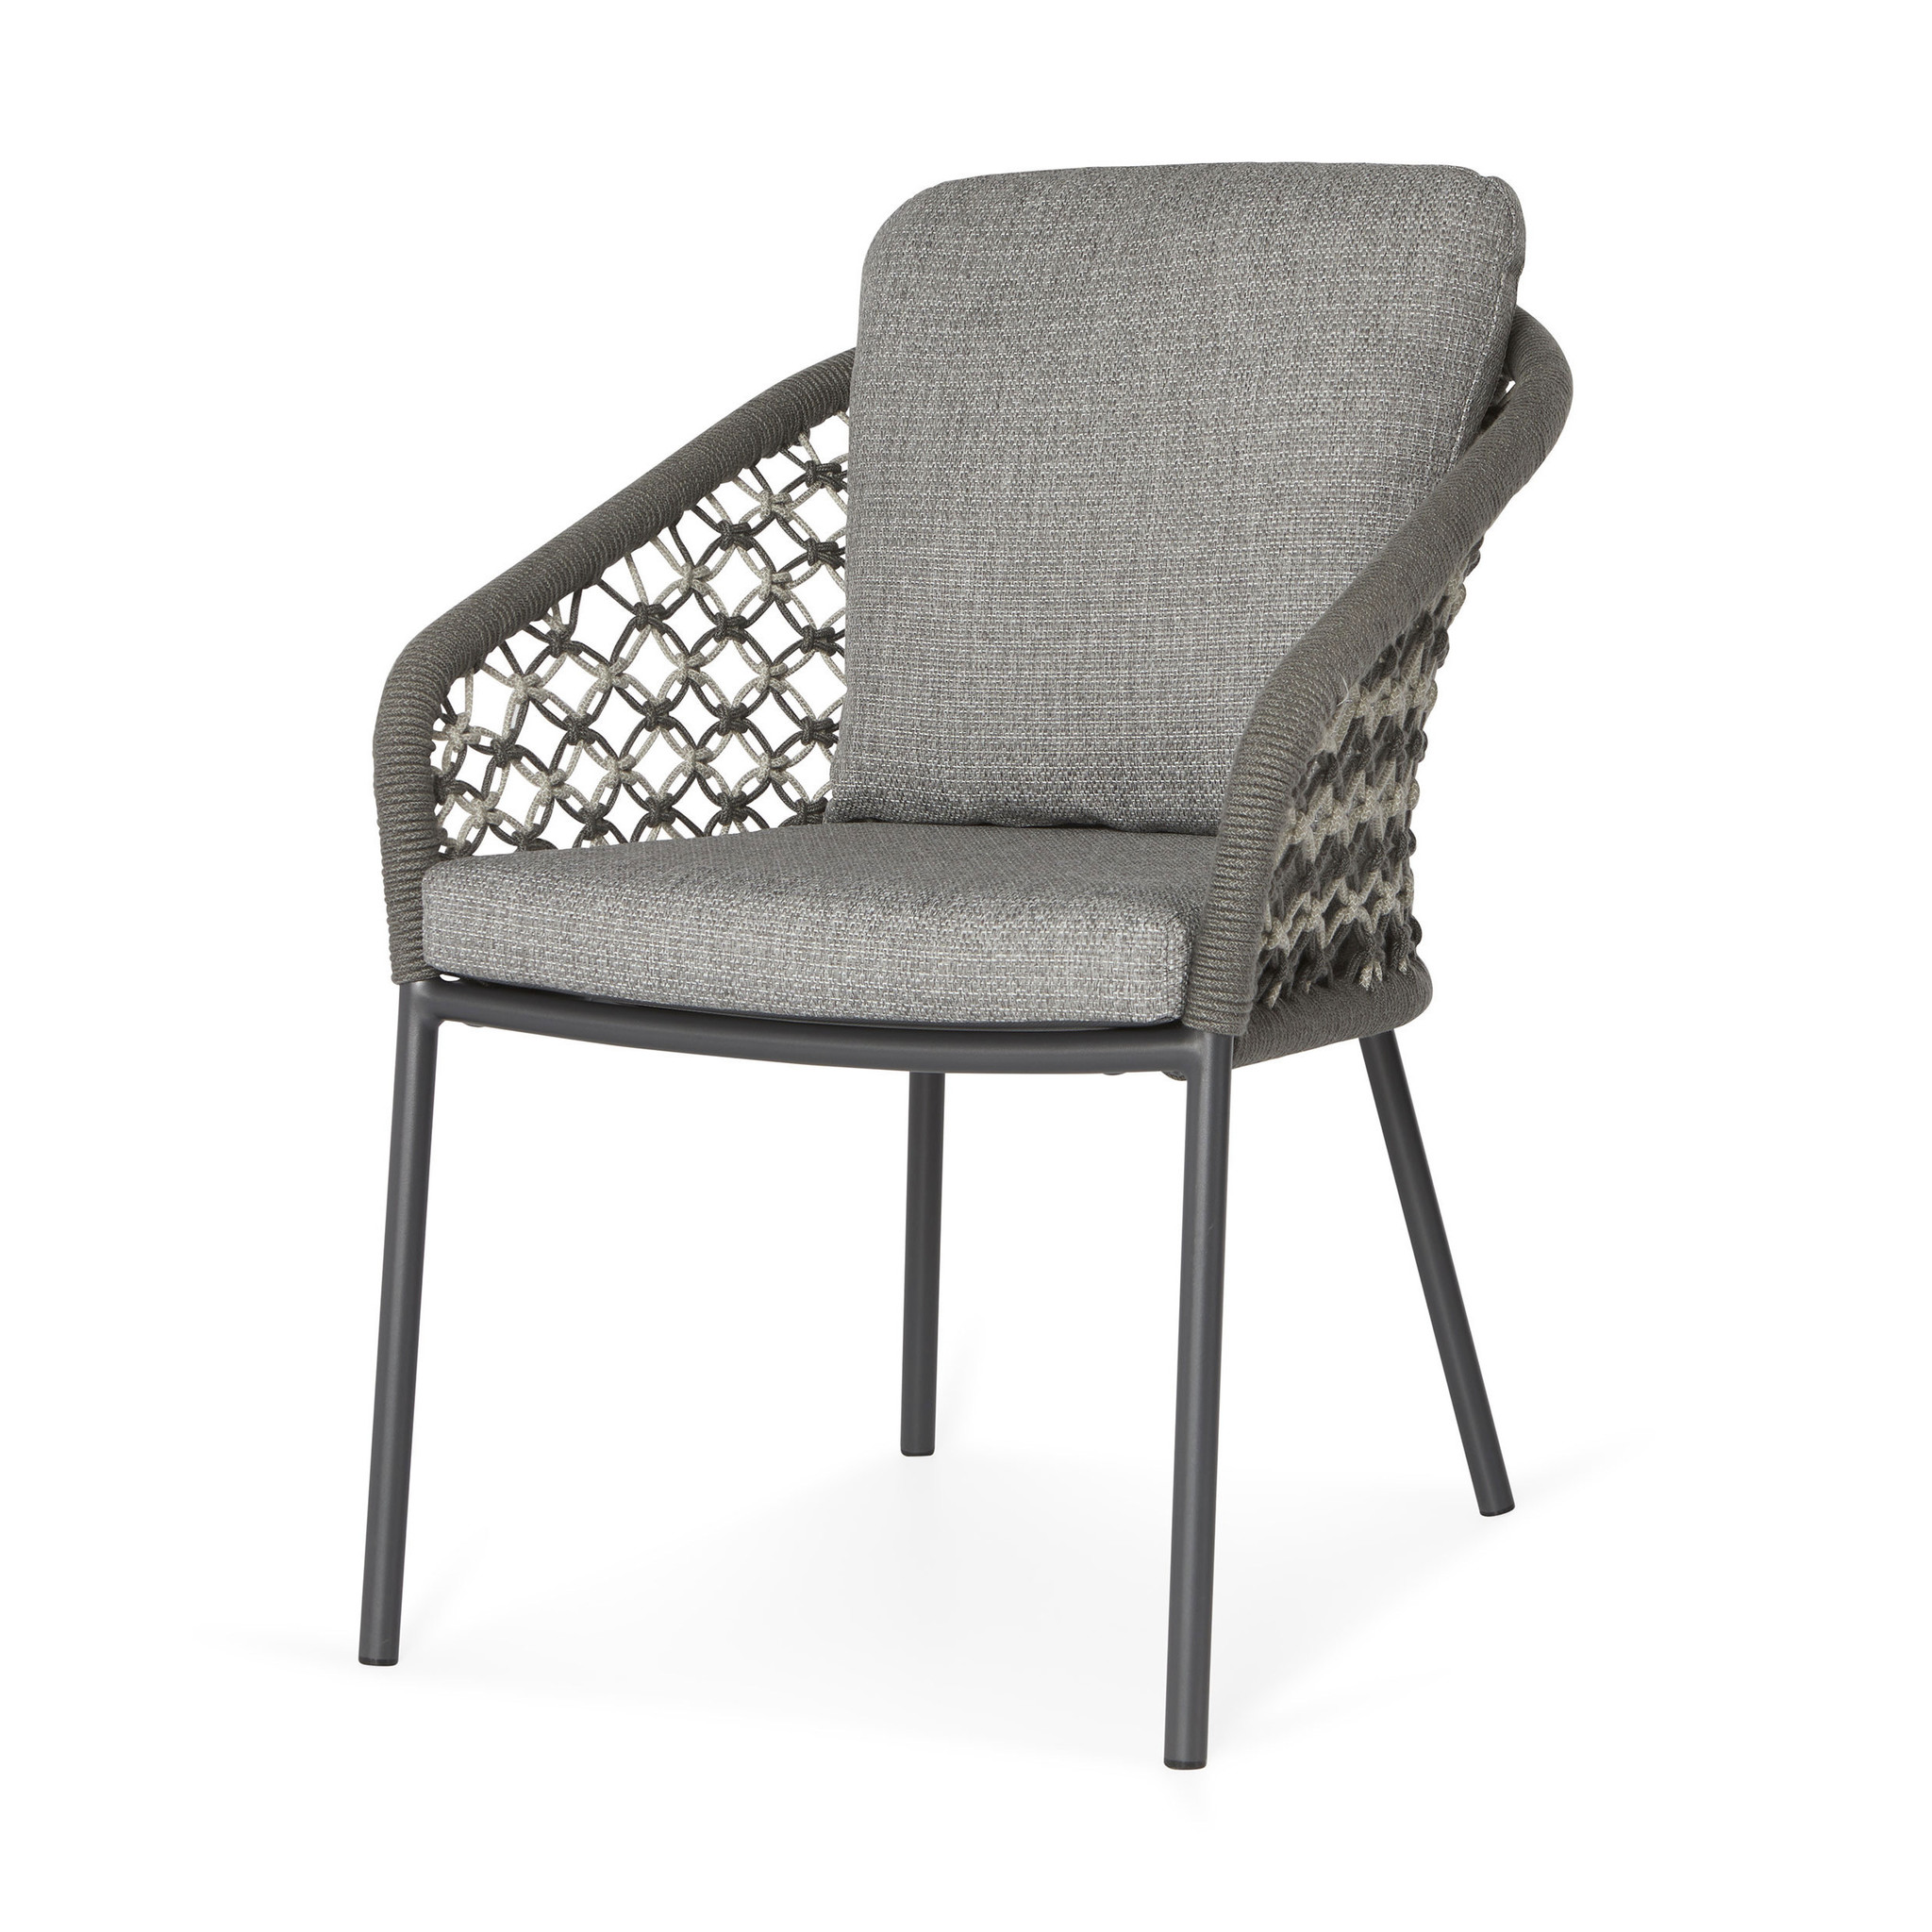 SUNS Nappa dining chair matt royal grey/mix macrame carbon grey/light anthracite